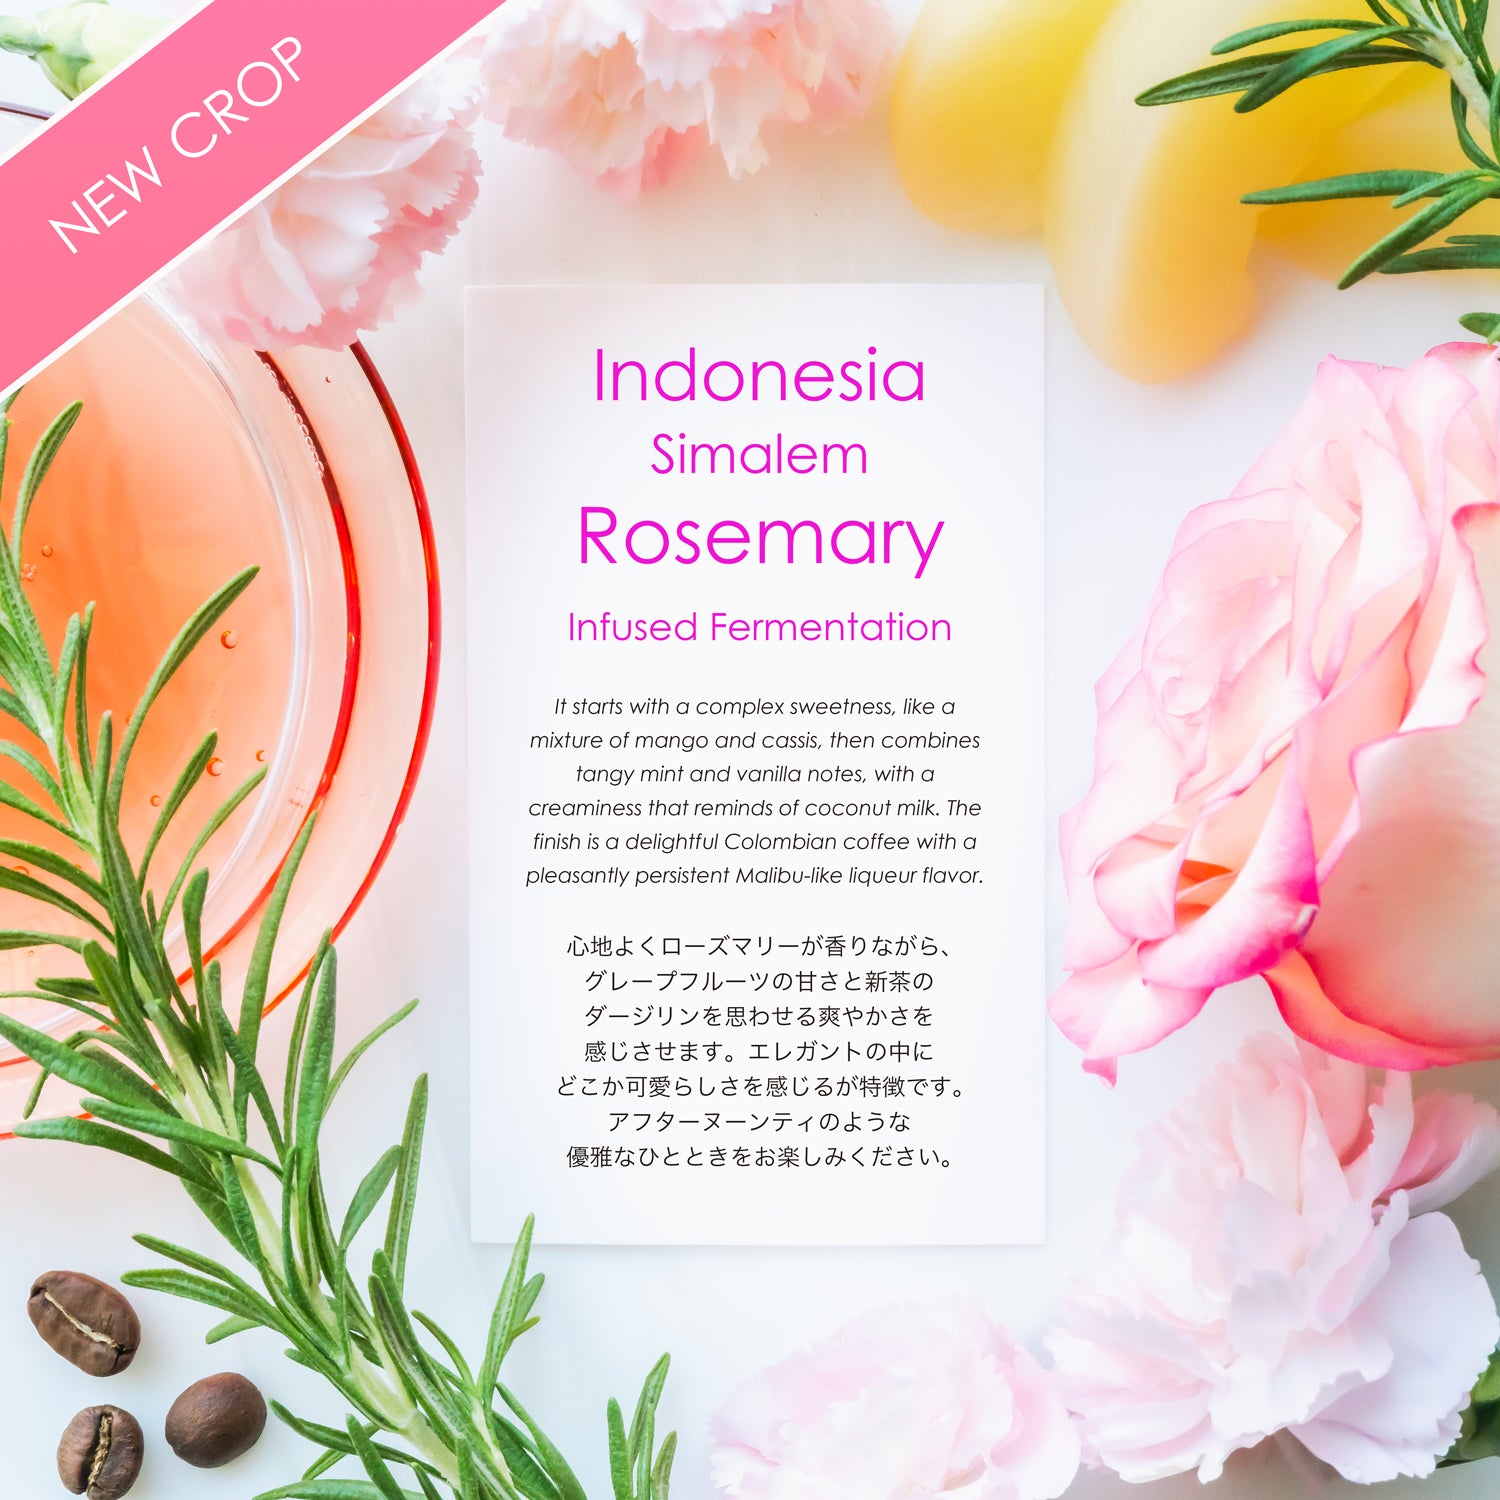 Simalem Rosemary Infused Fermentation [Rosemary]